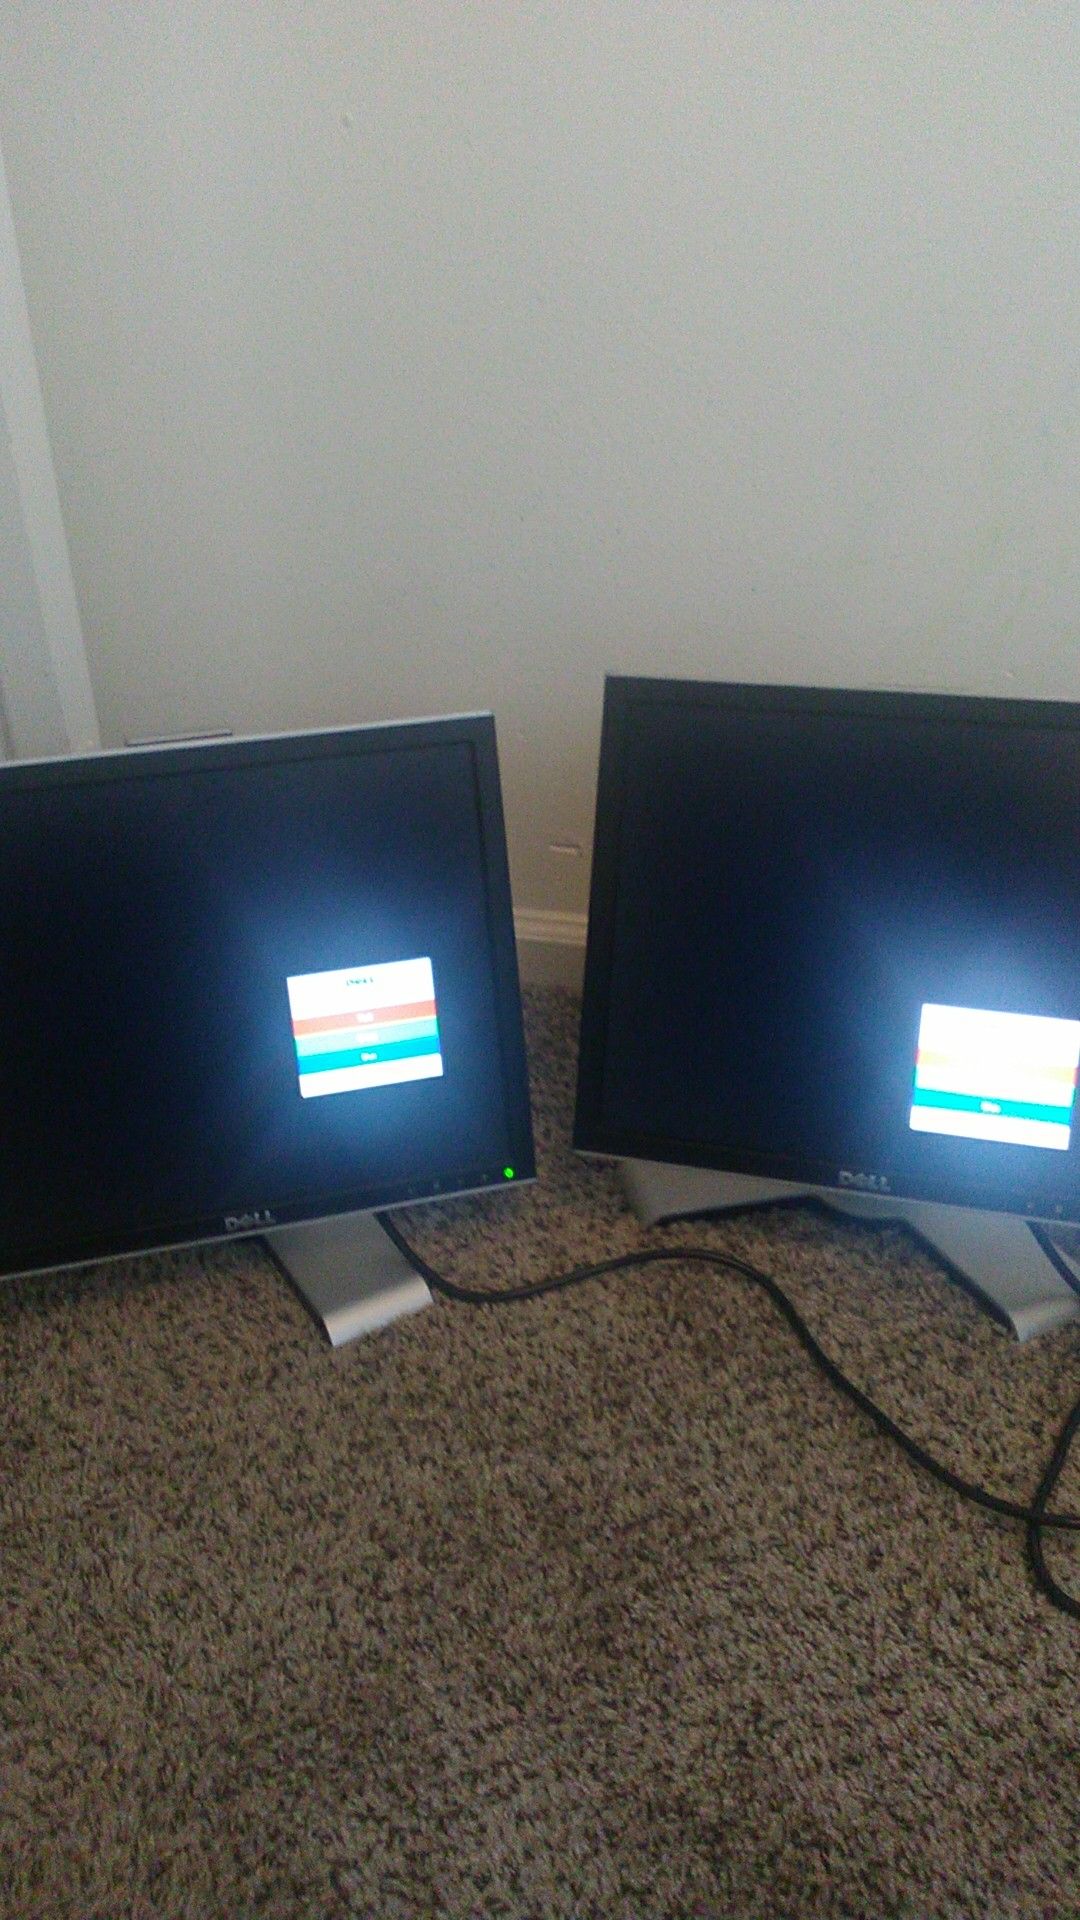 Dual monitors (Dell)